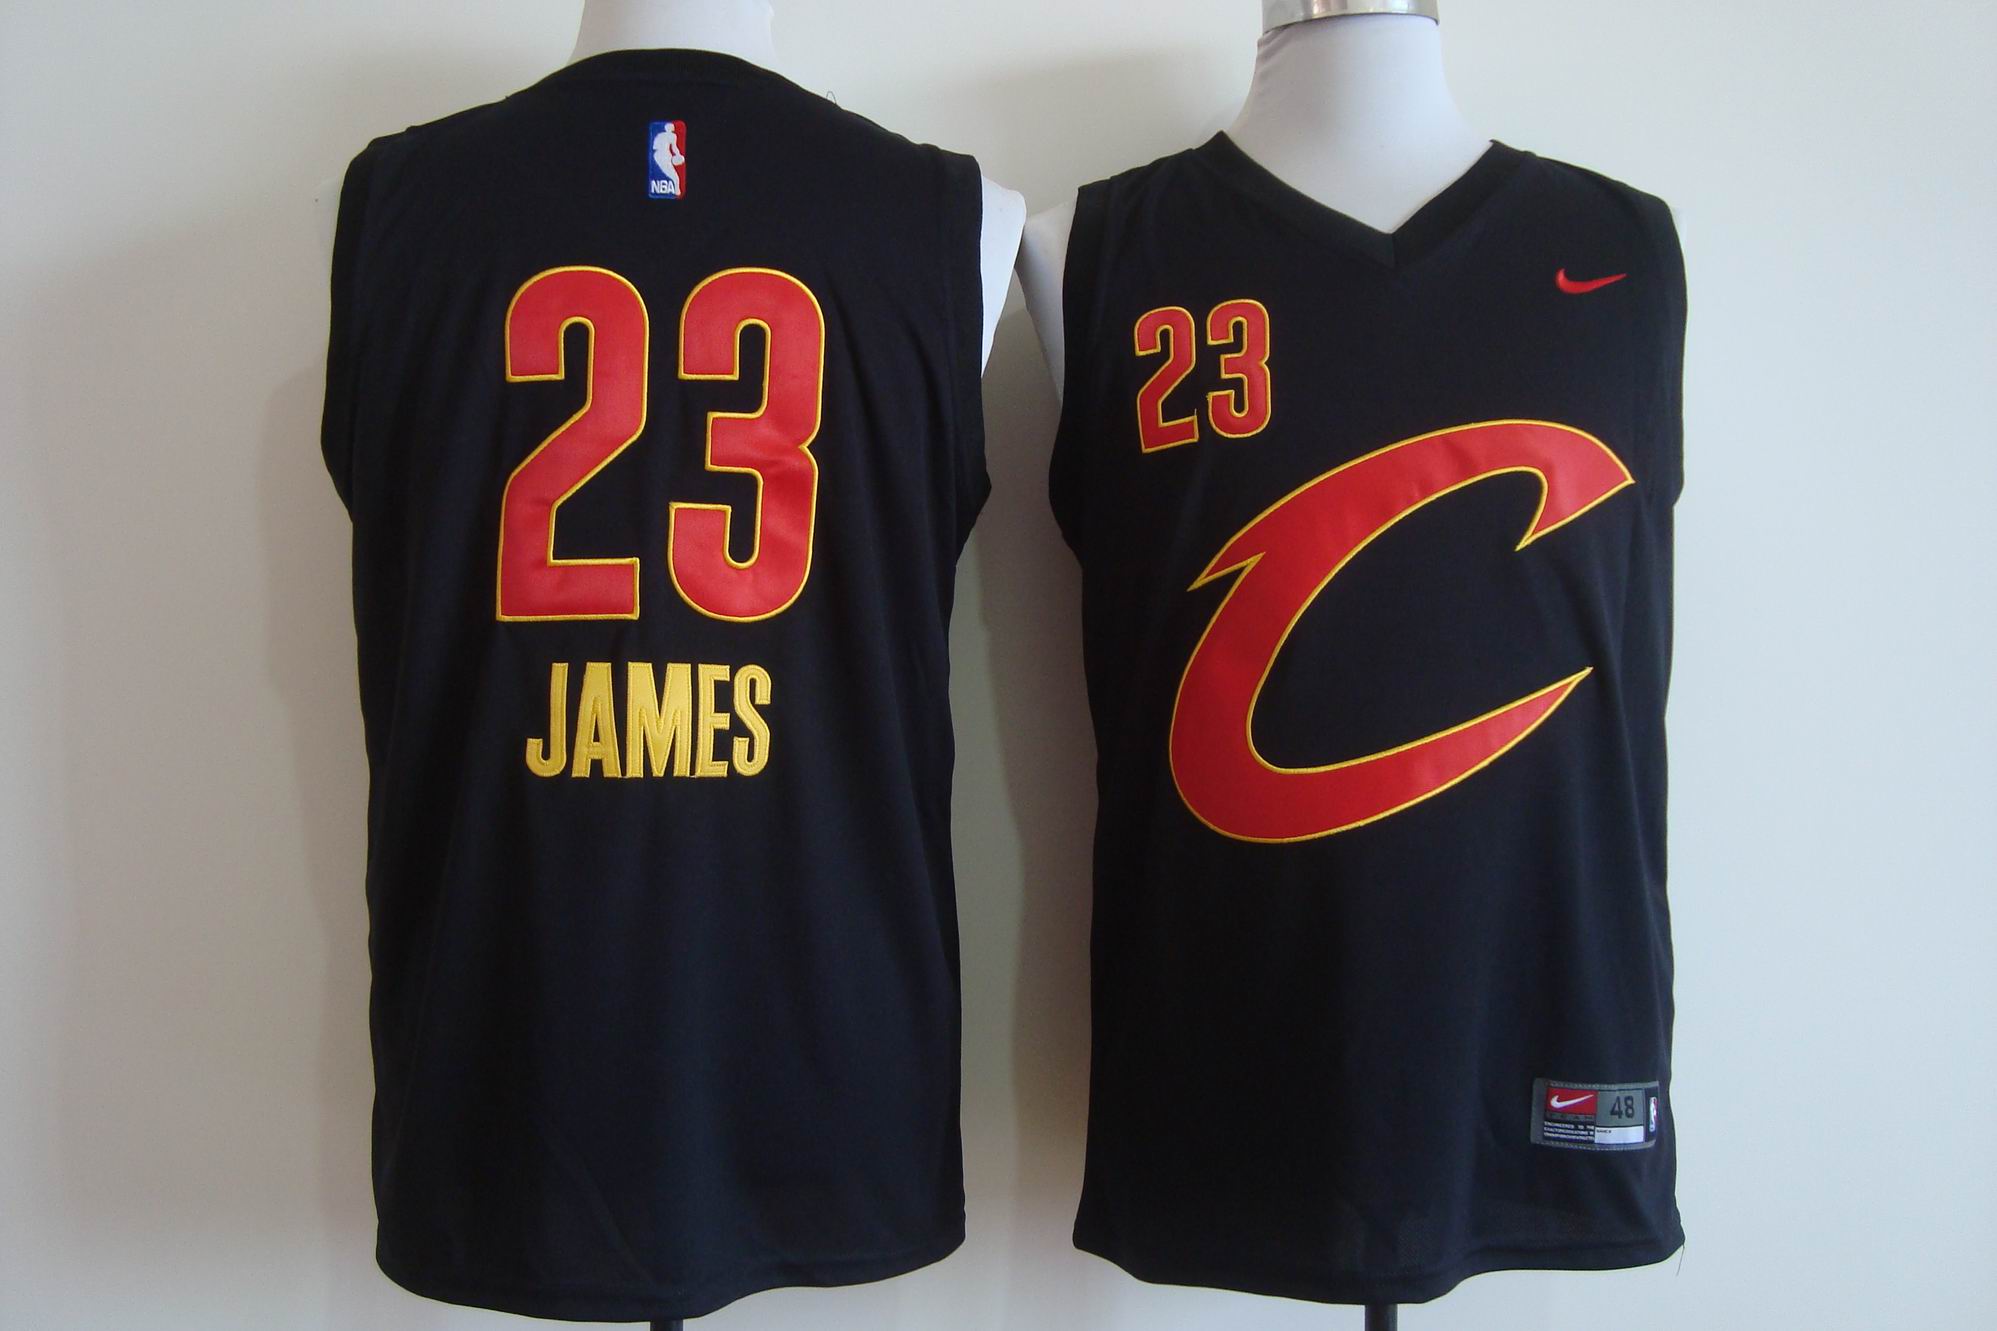 Men's Nike Cleveland Cavaliers #23 LeBron James Black Stitched NBA C Jersey